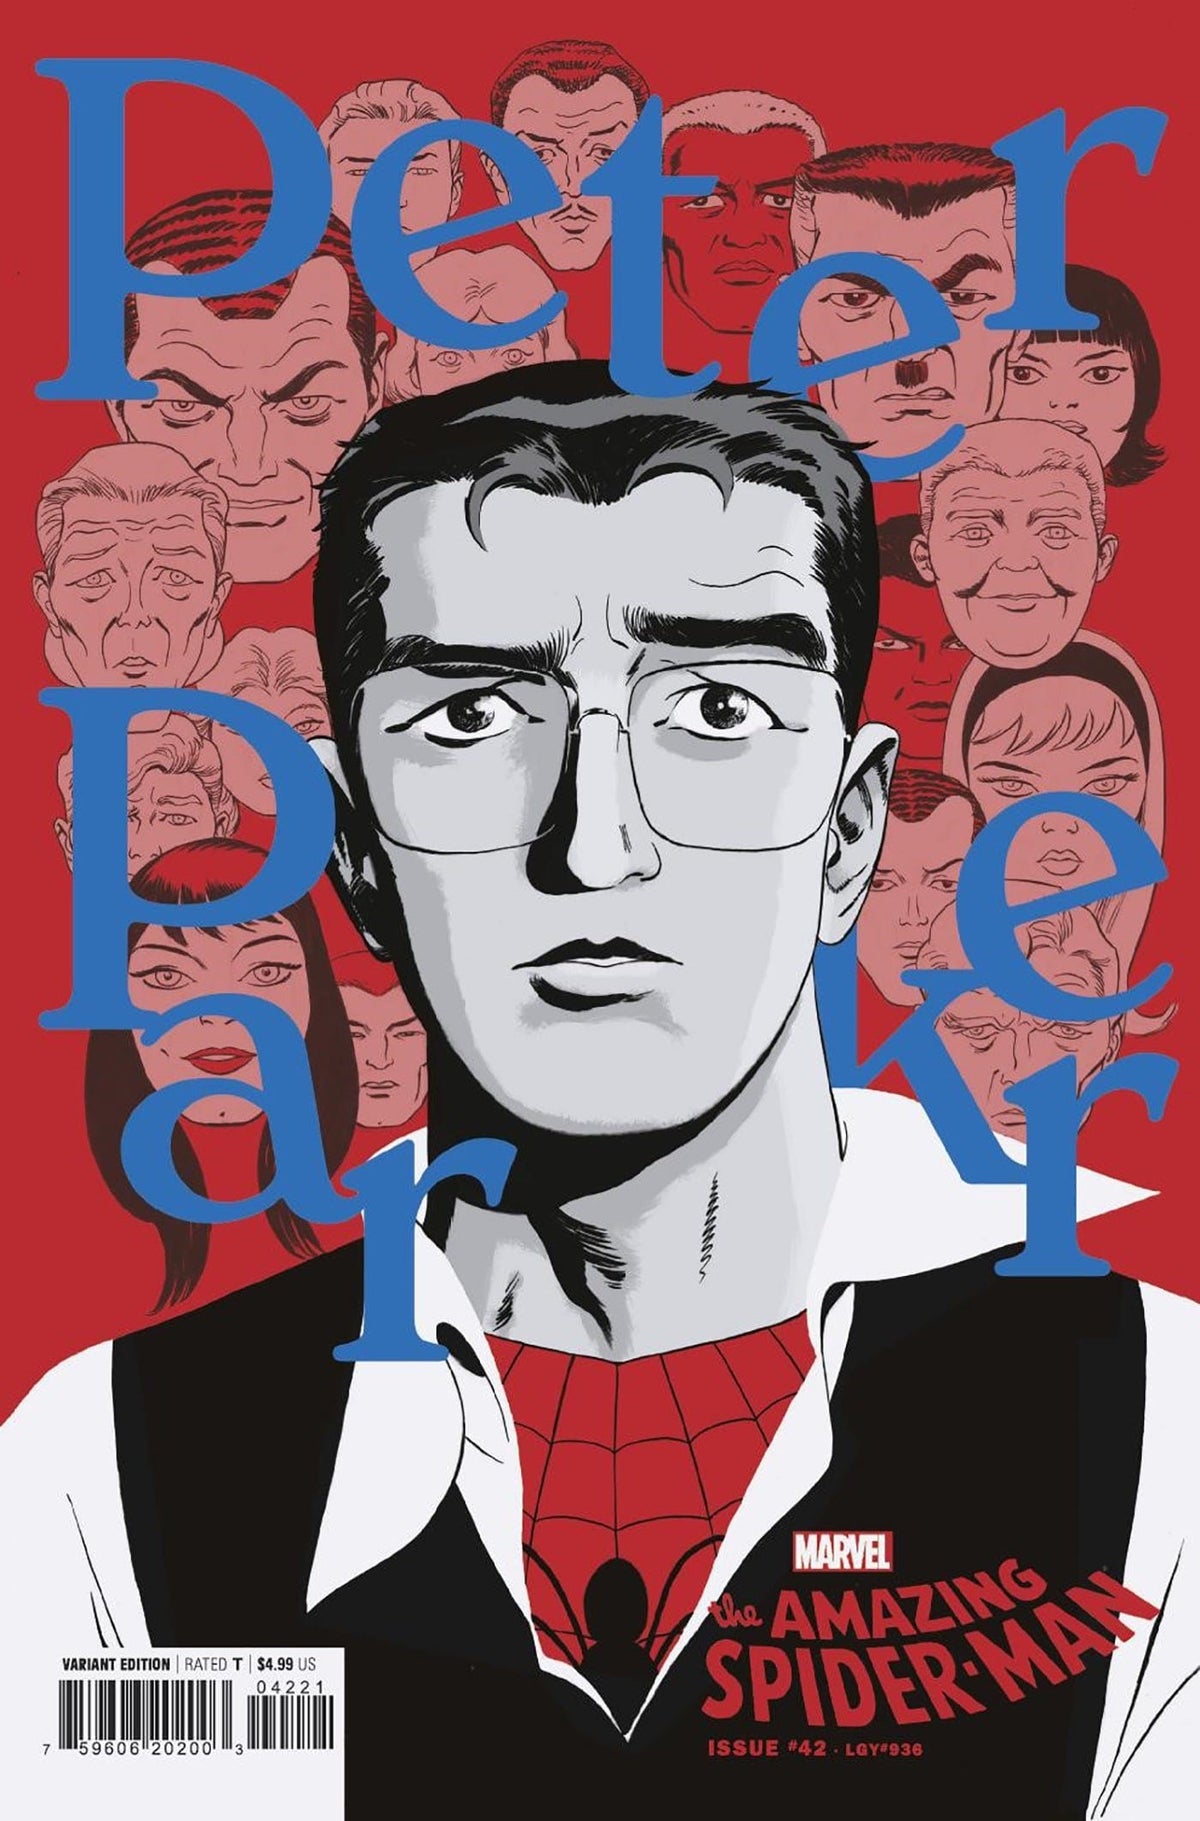 AMAZING SPIDER-MAN #42 TBD ARTIST PETER PARKERVERSE VAR